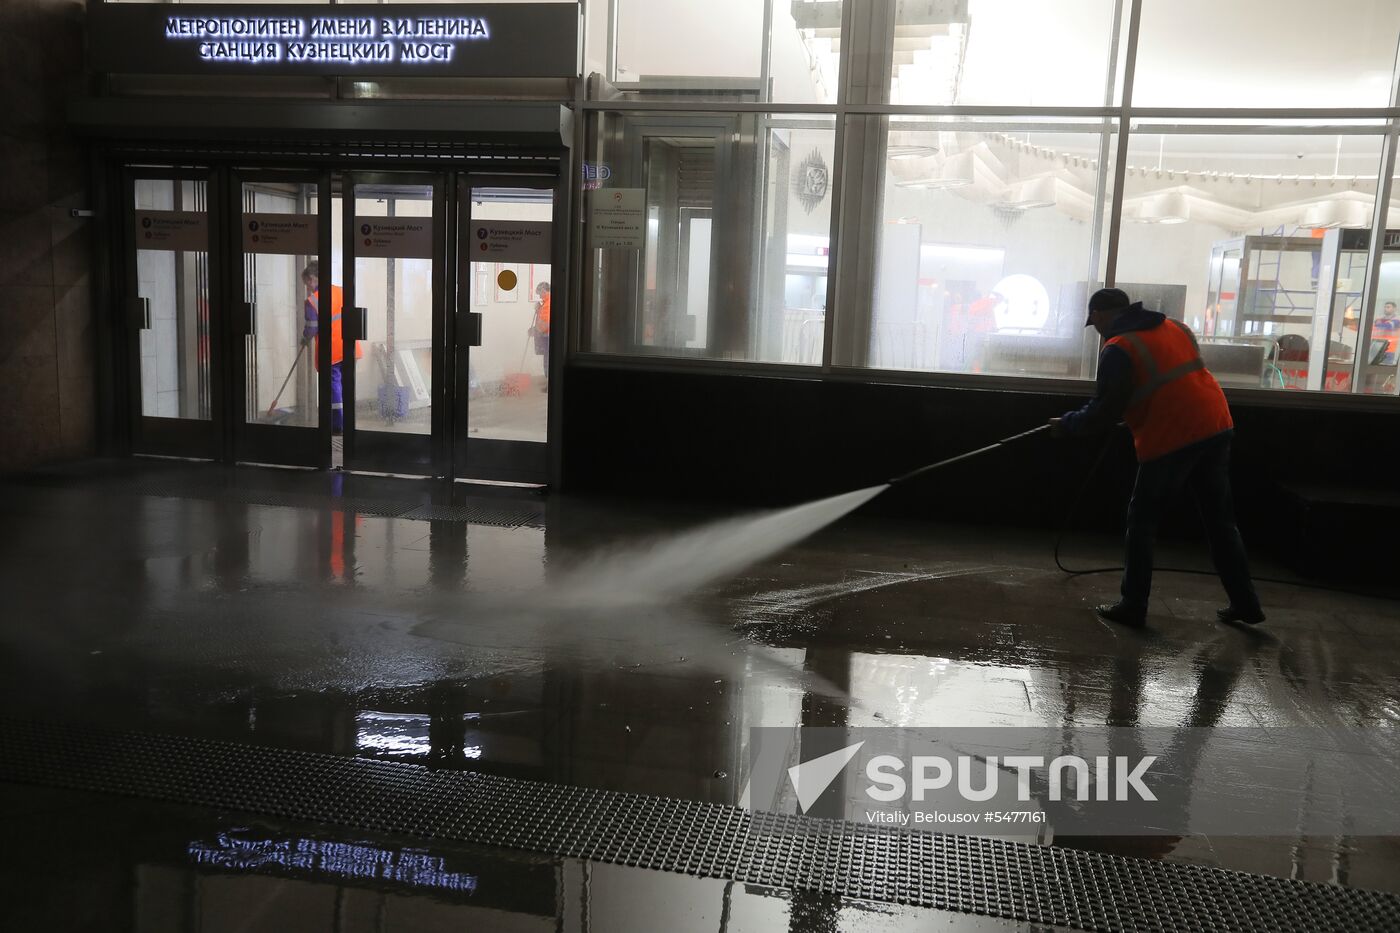 Cleaning of Kuznetsky Most metro station